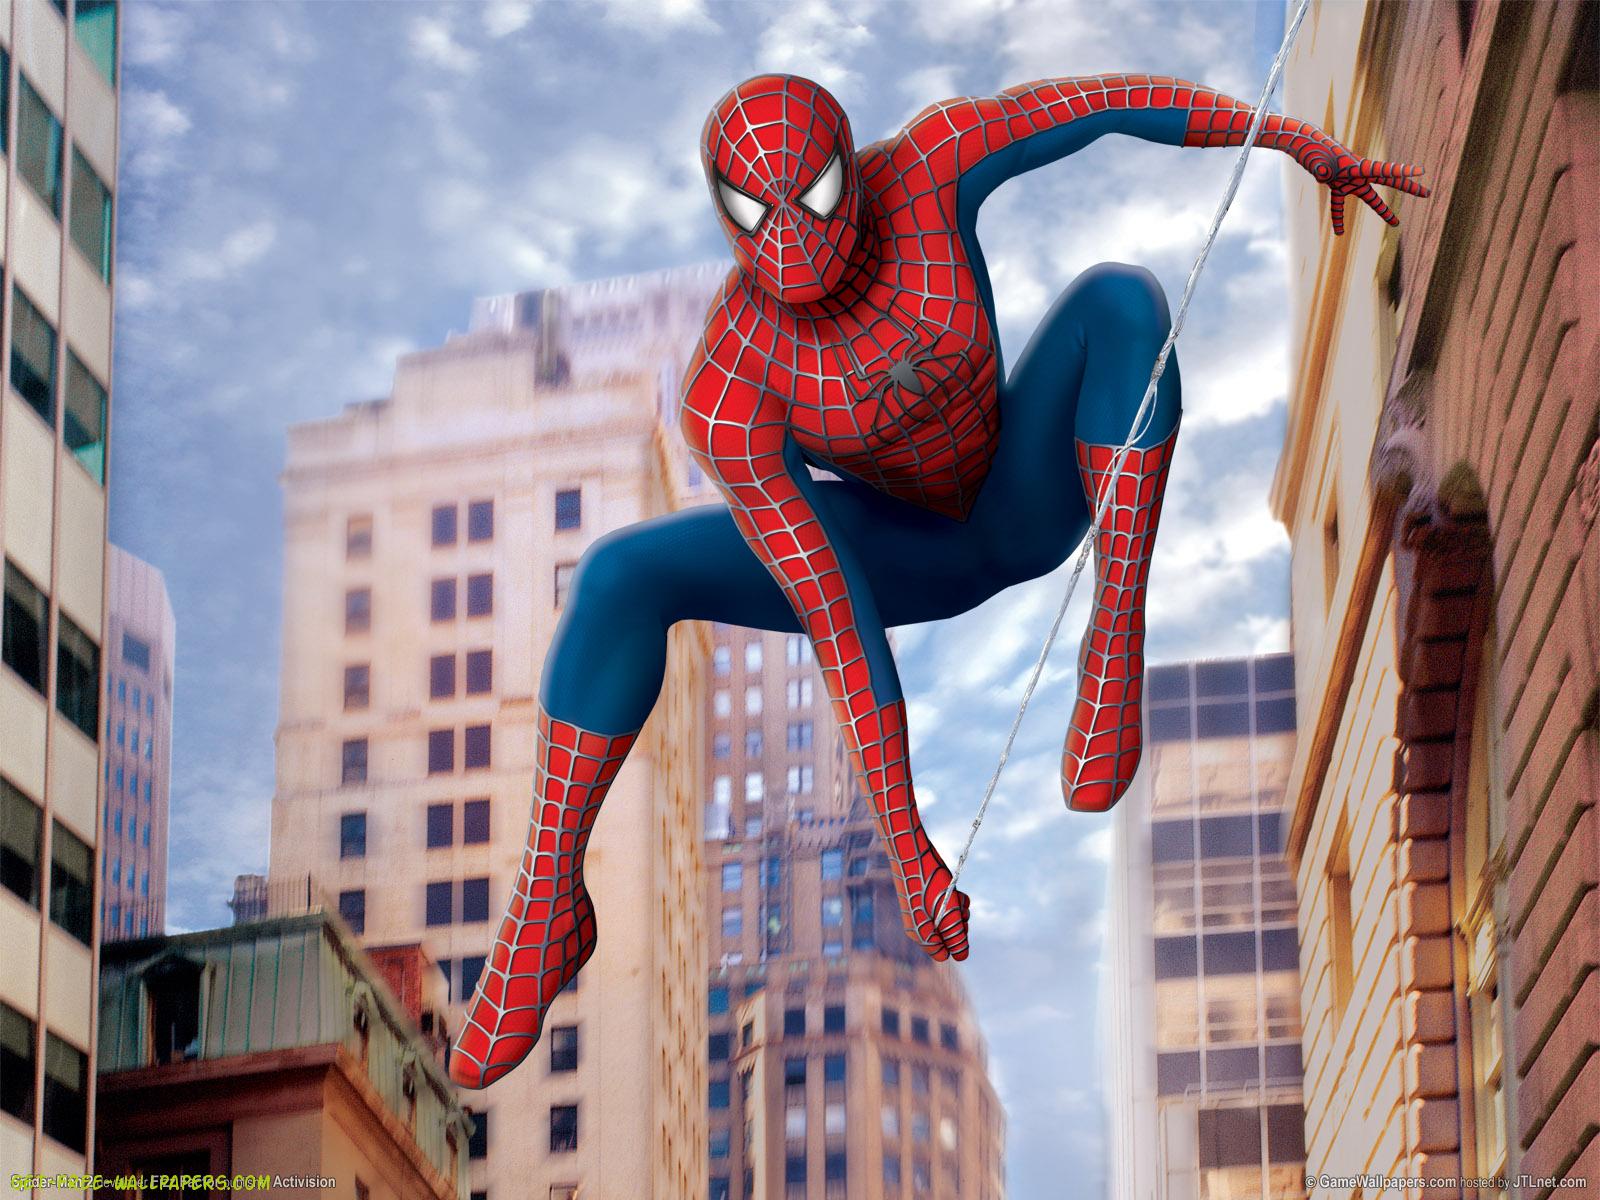 My Movie Review imdb copyright: Spider-Man (2002)